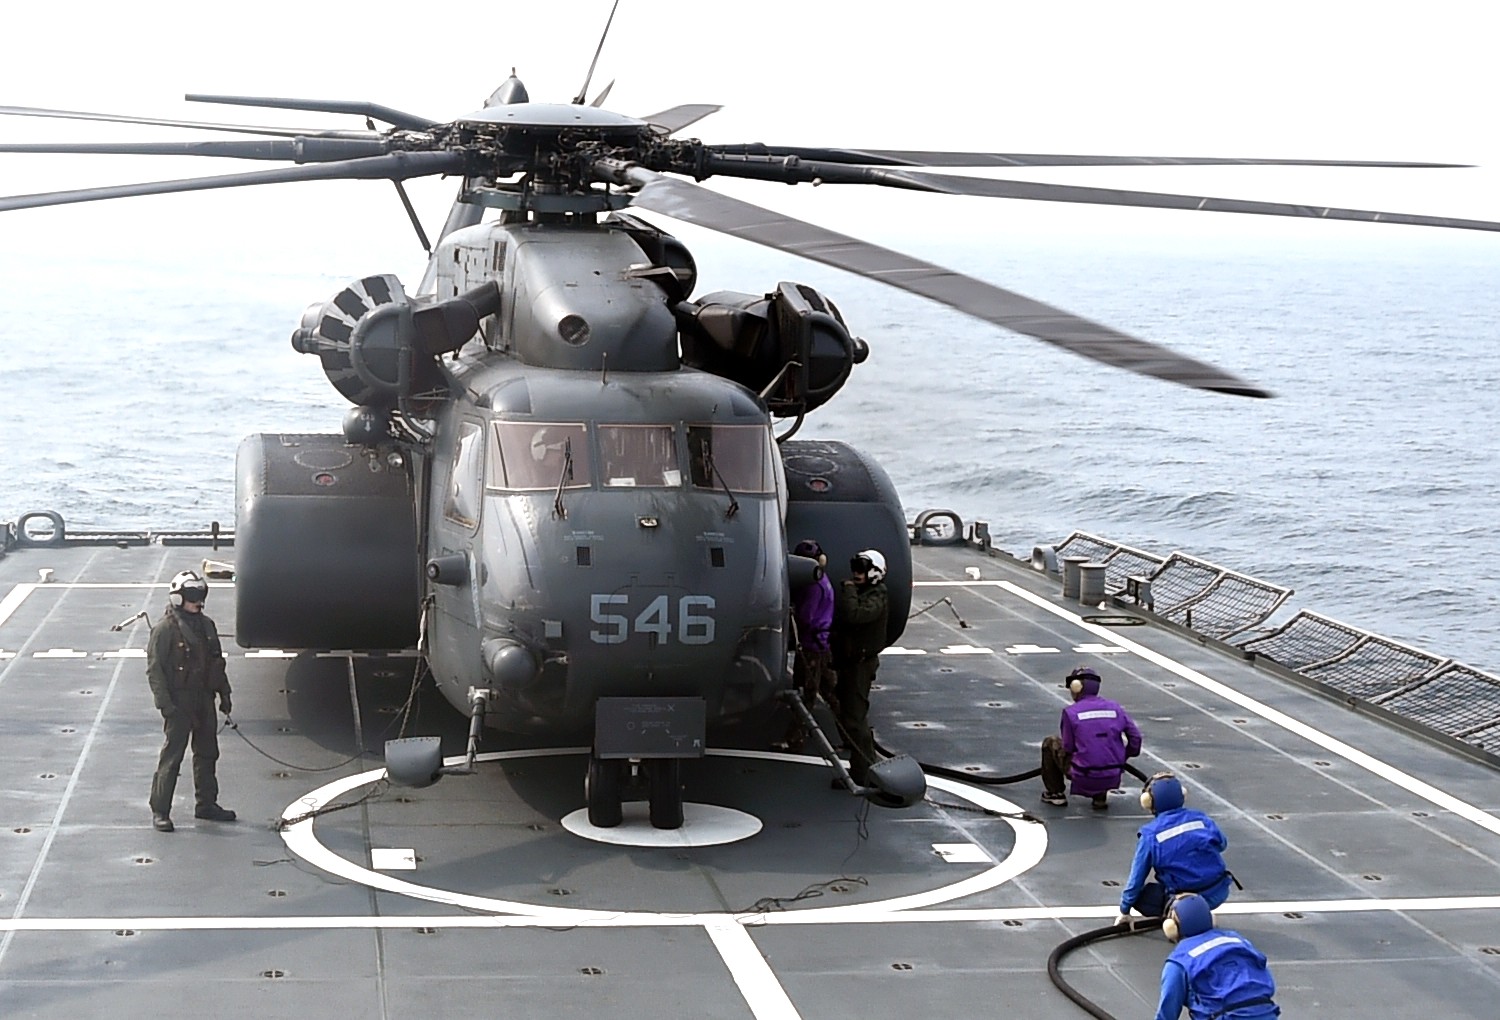 hm-14 vanguard helicopter mine countermeasures squadron navy mh-53e sea dragon 27